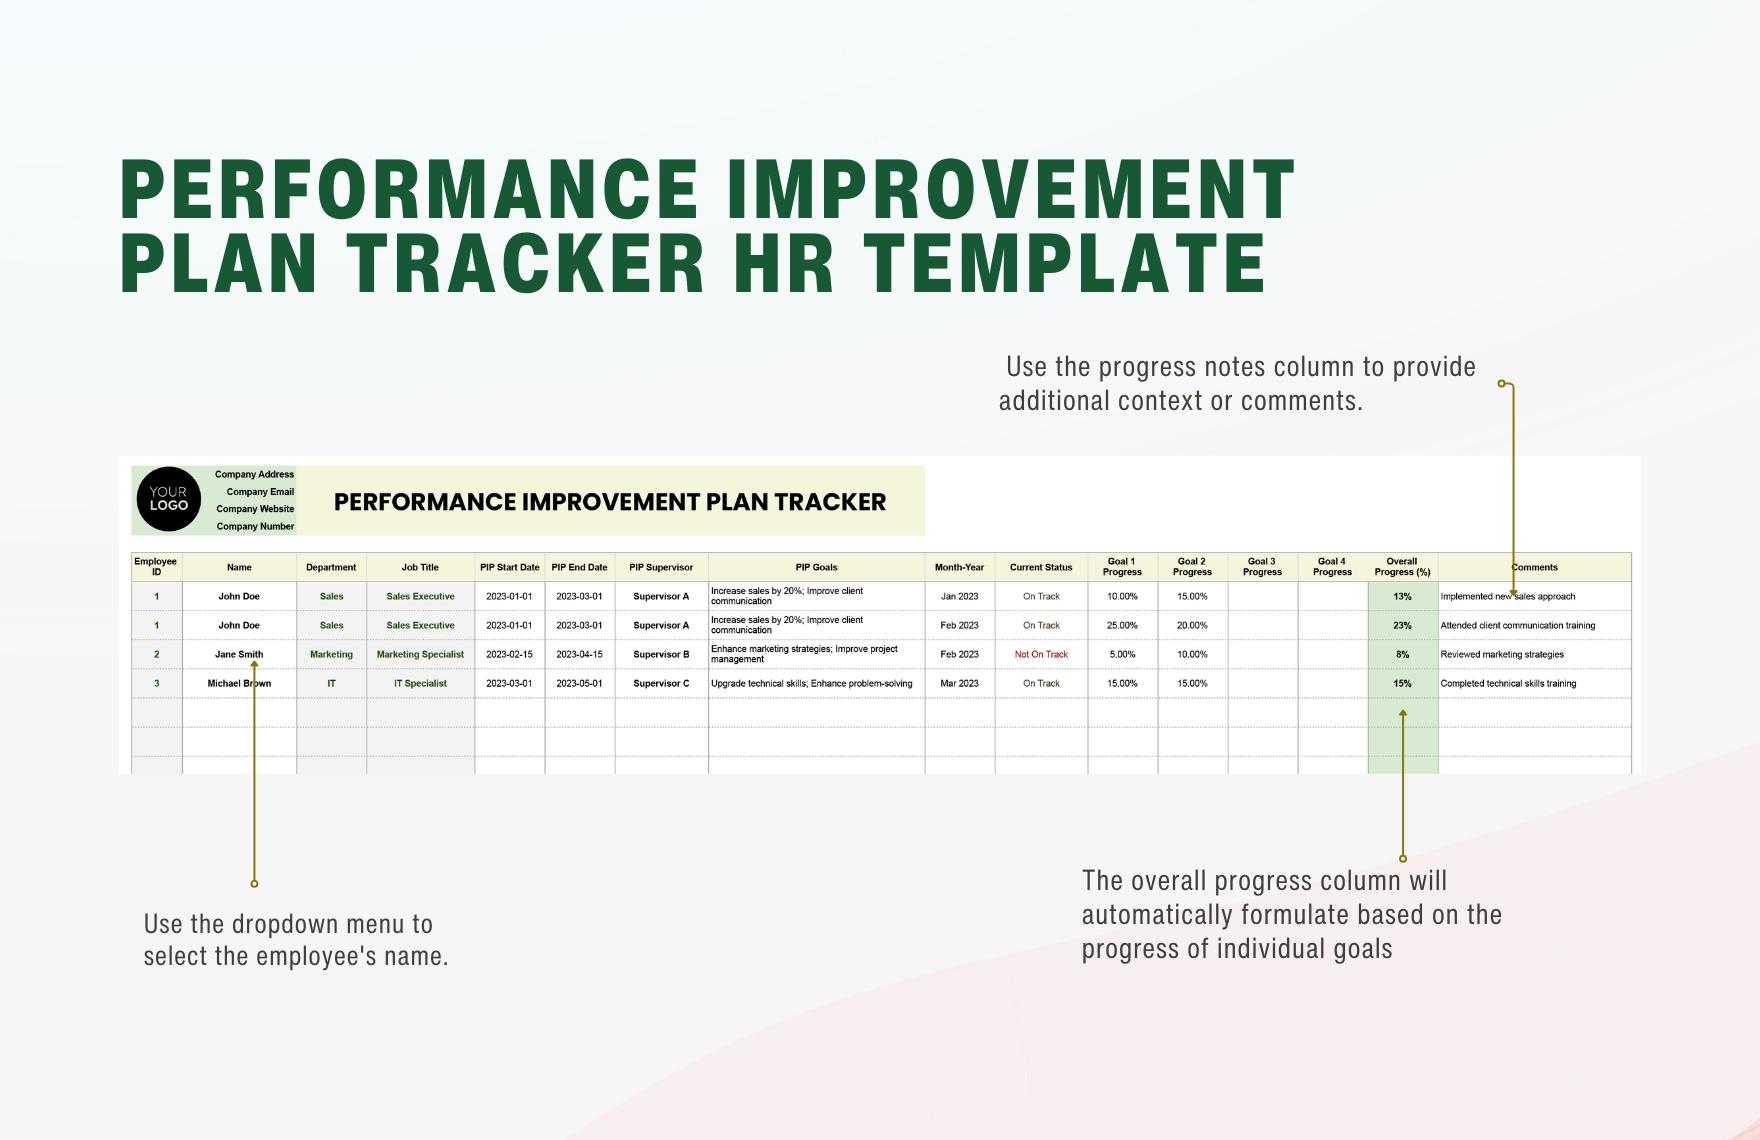 Performance Improvement Plan Tracker HR Template